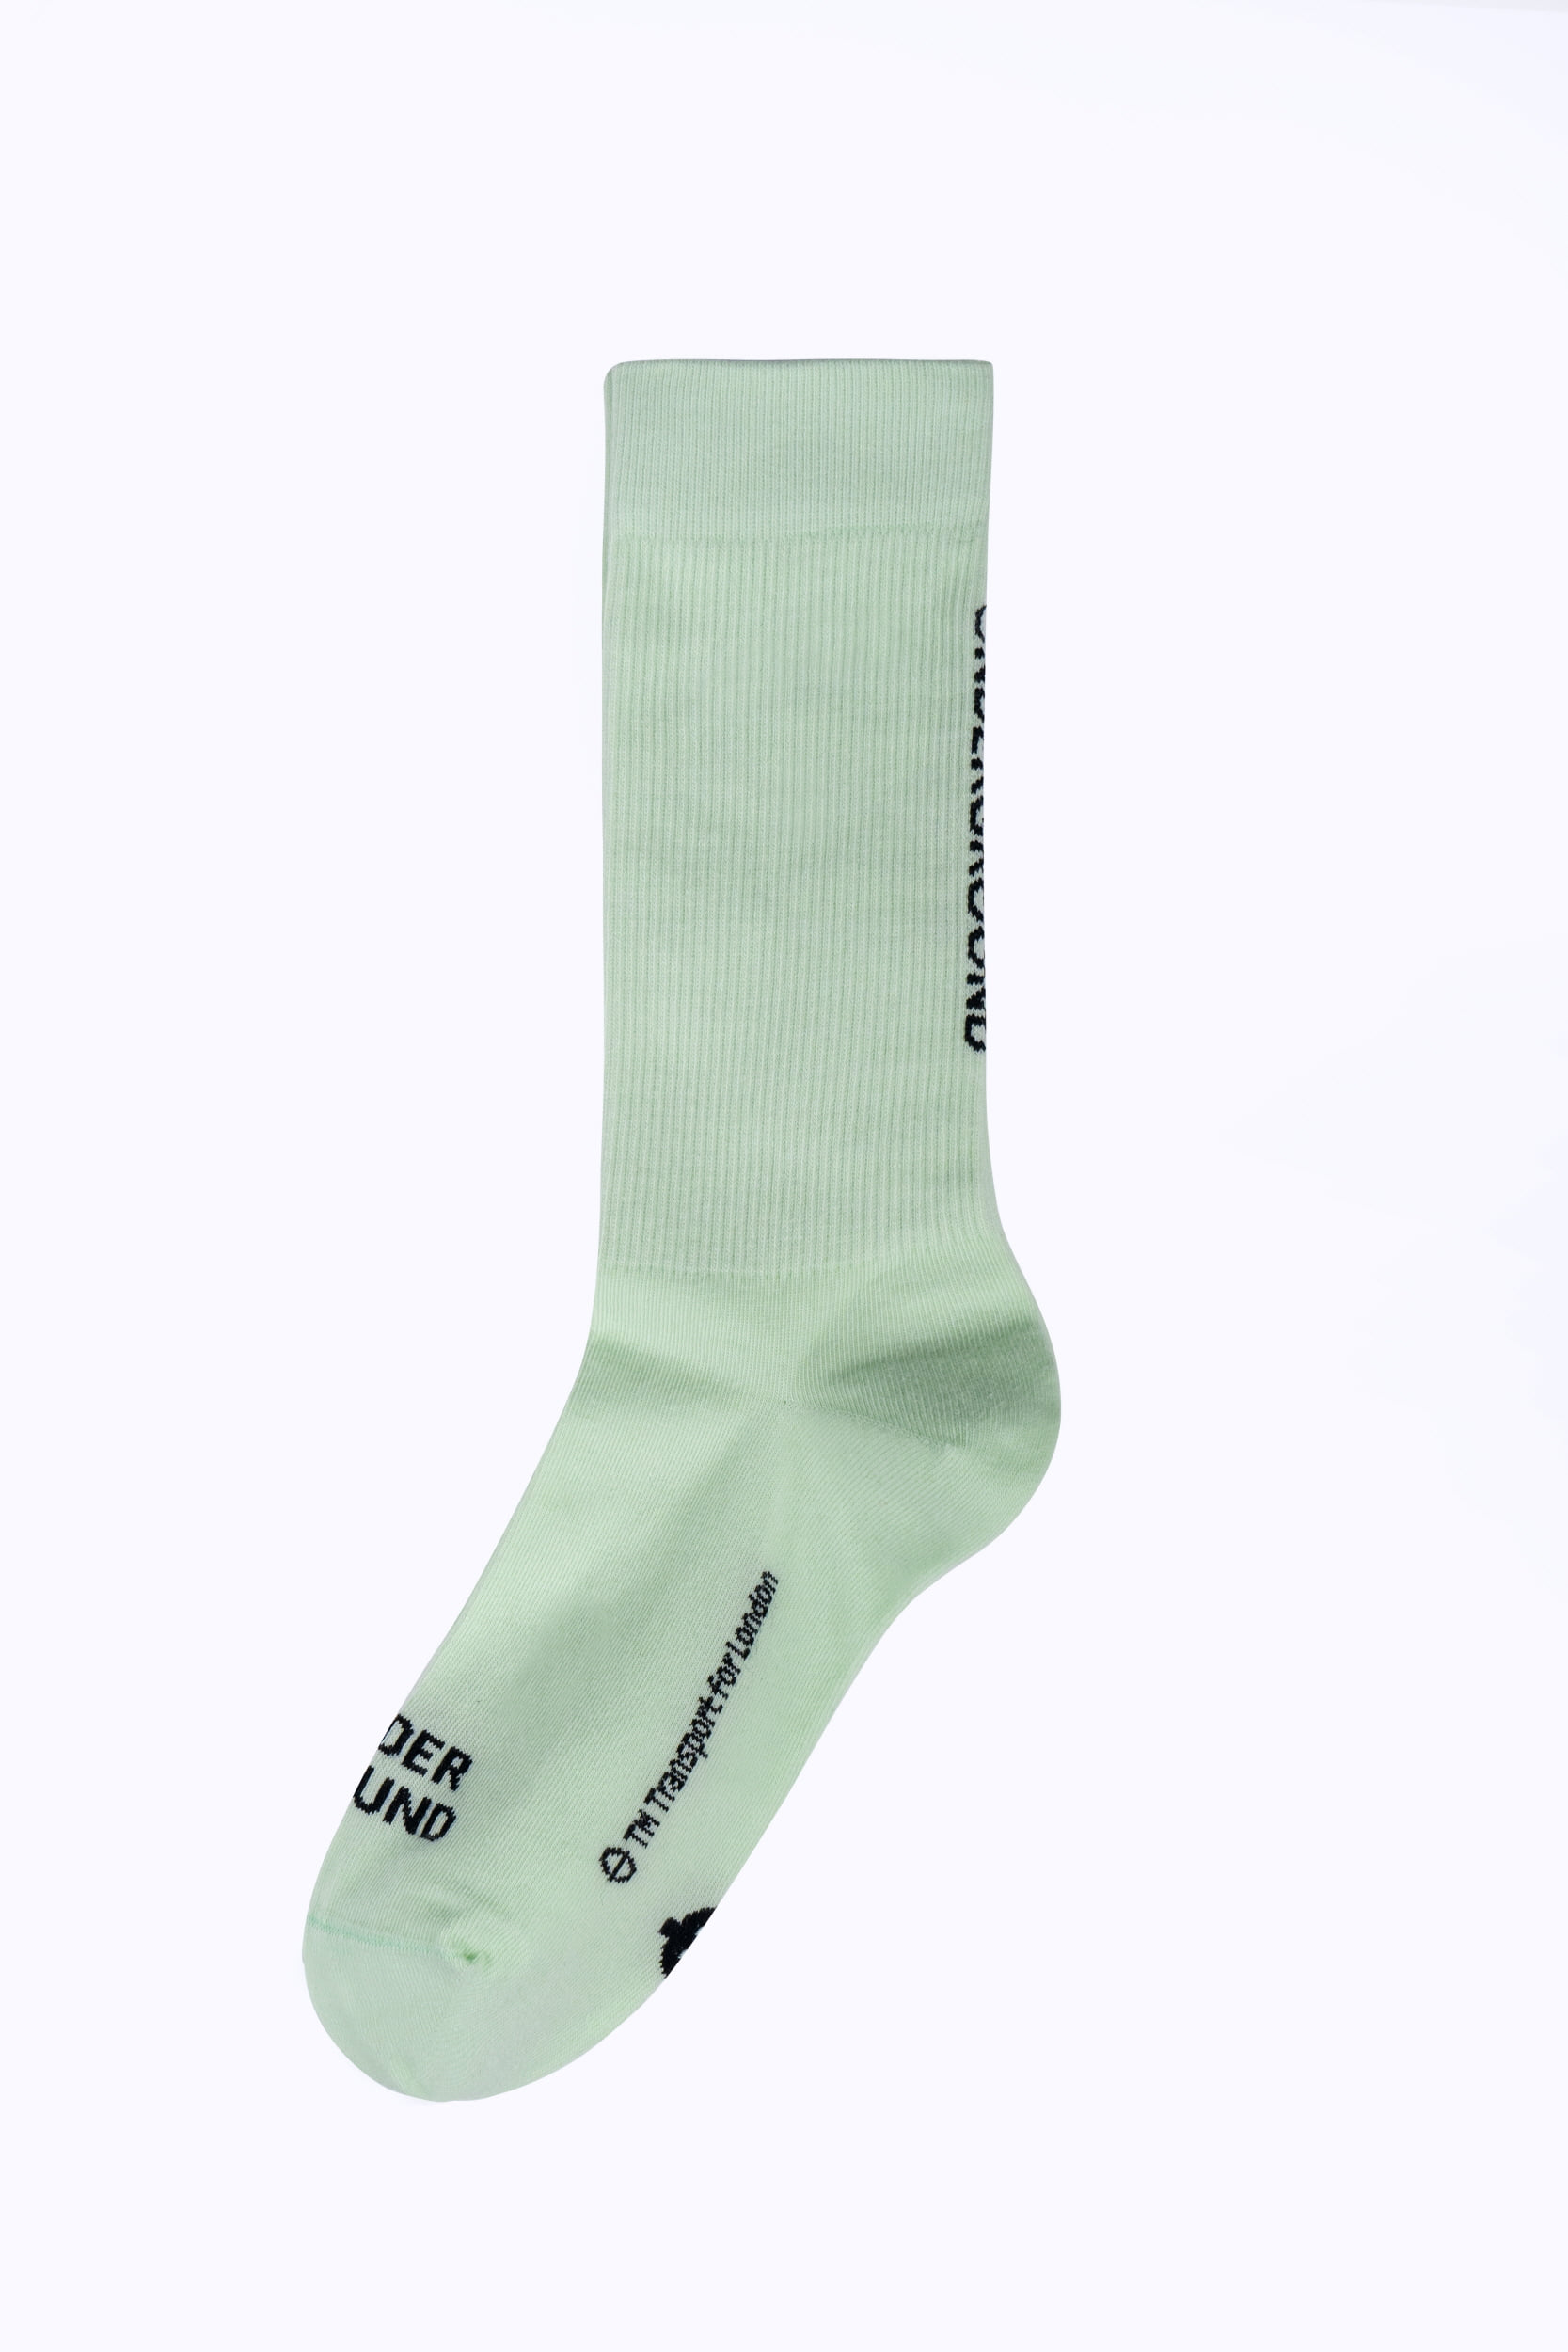 Undergound socks_Pale Green